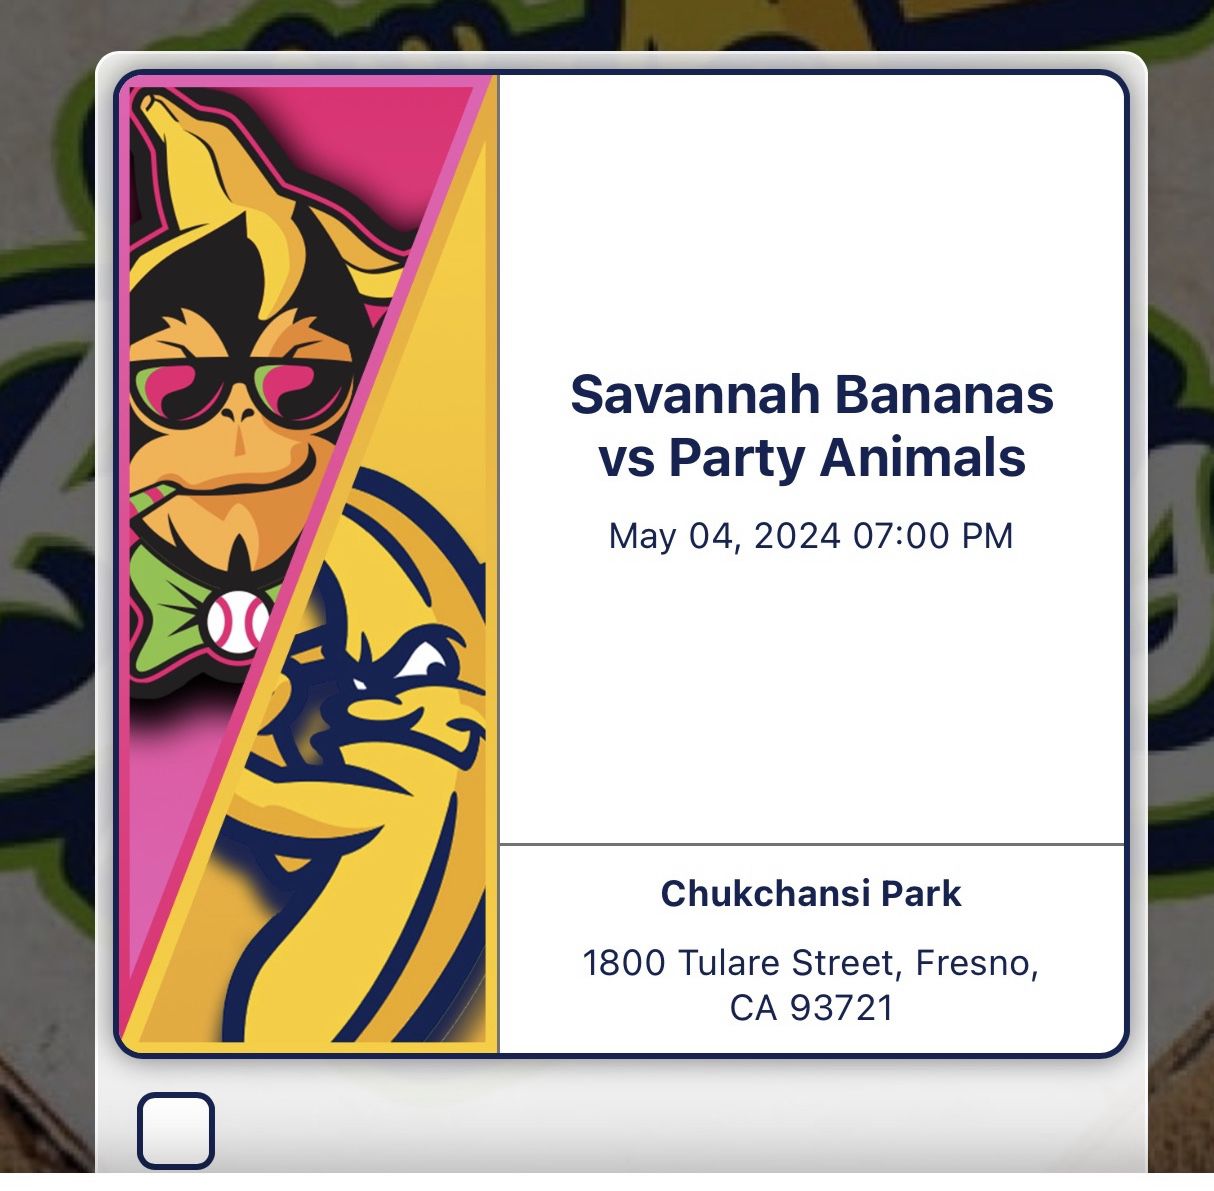 Savannah Bananas Vs Party Animals X 4 Tickets 